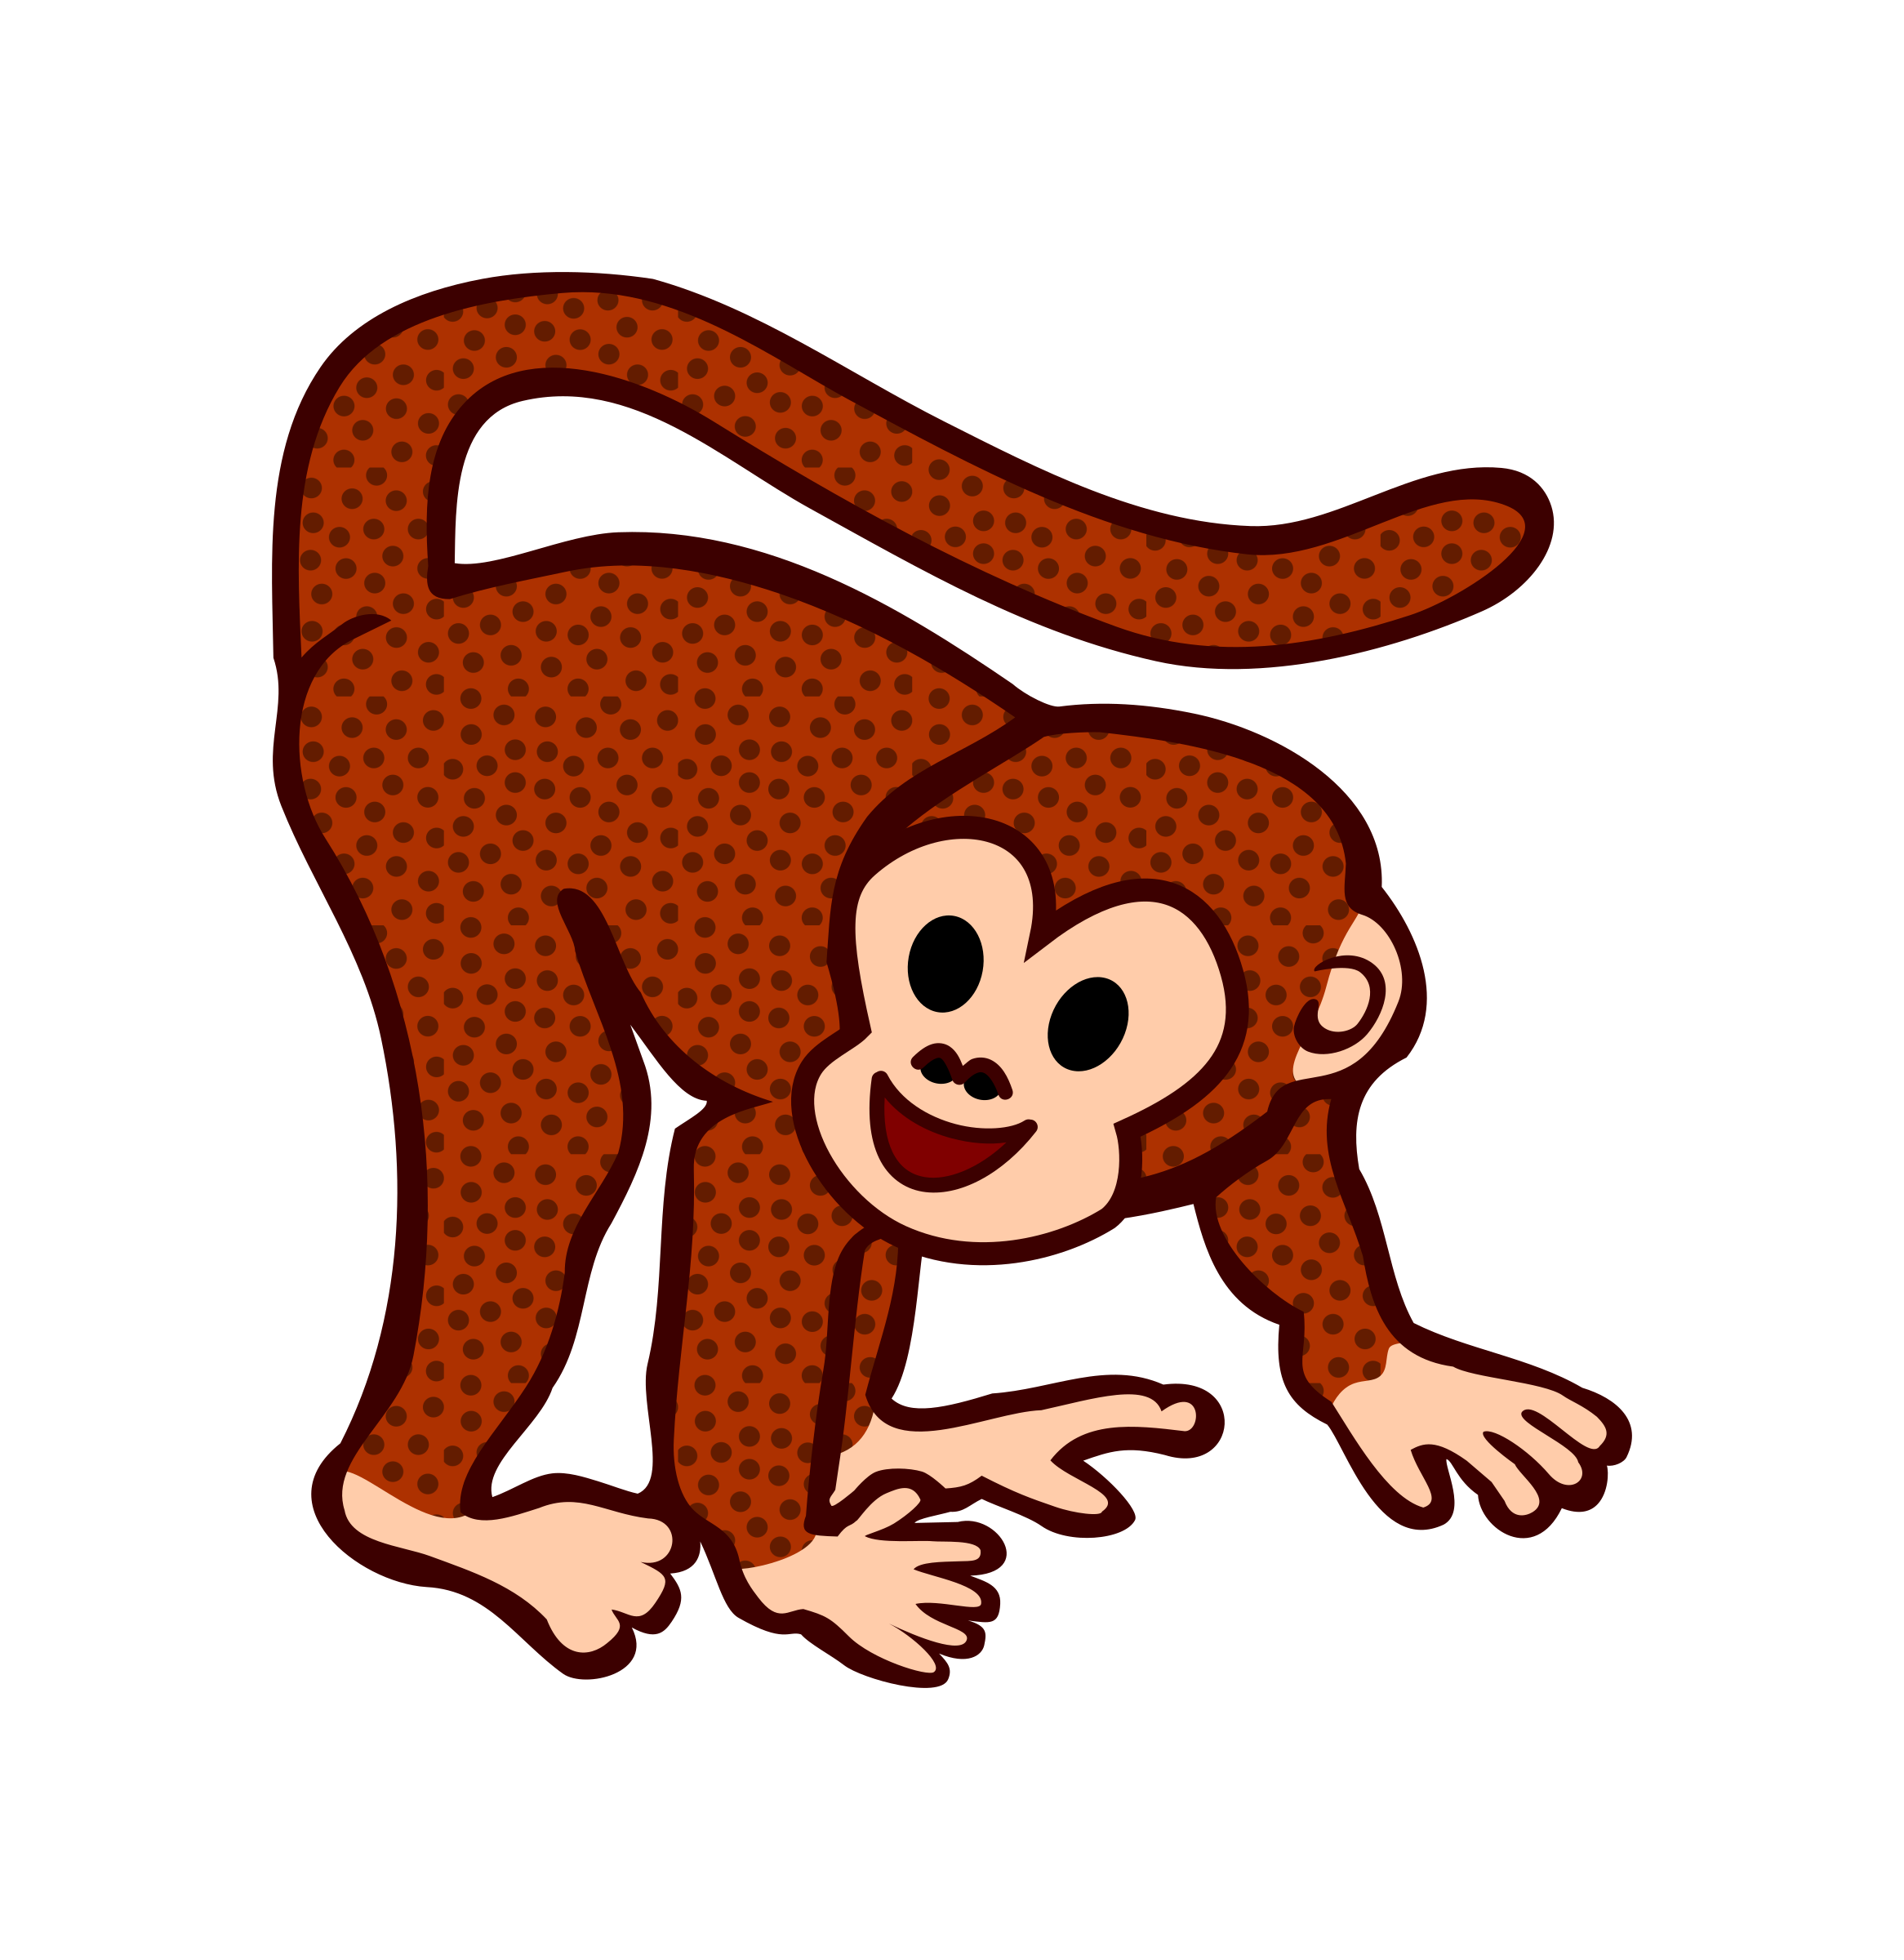 Monkey remix big image. Monkeys clipart chimpanzee